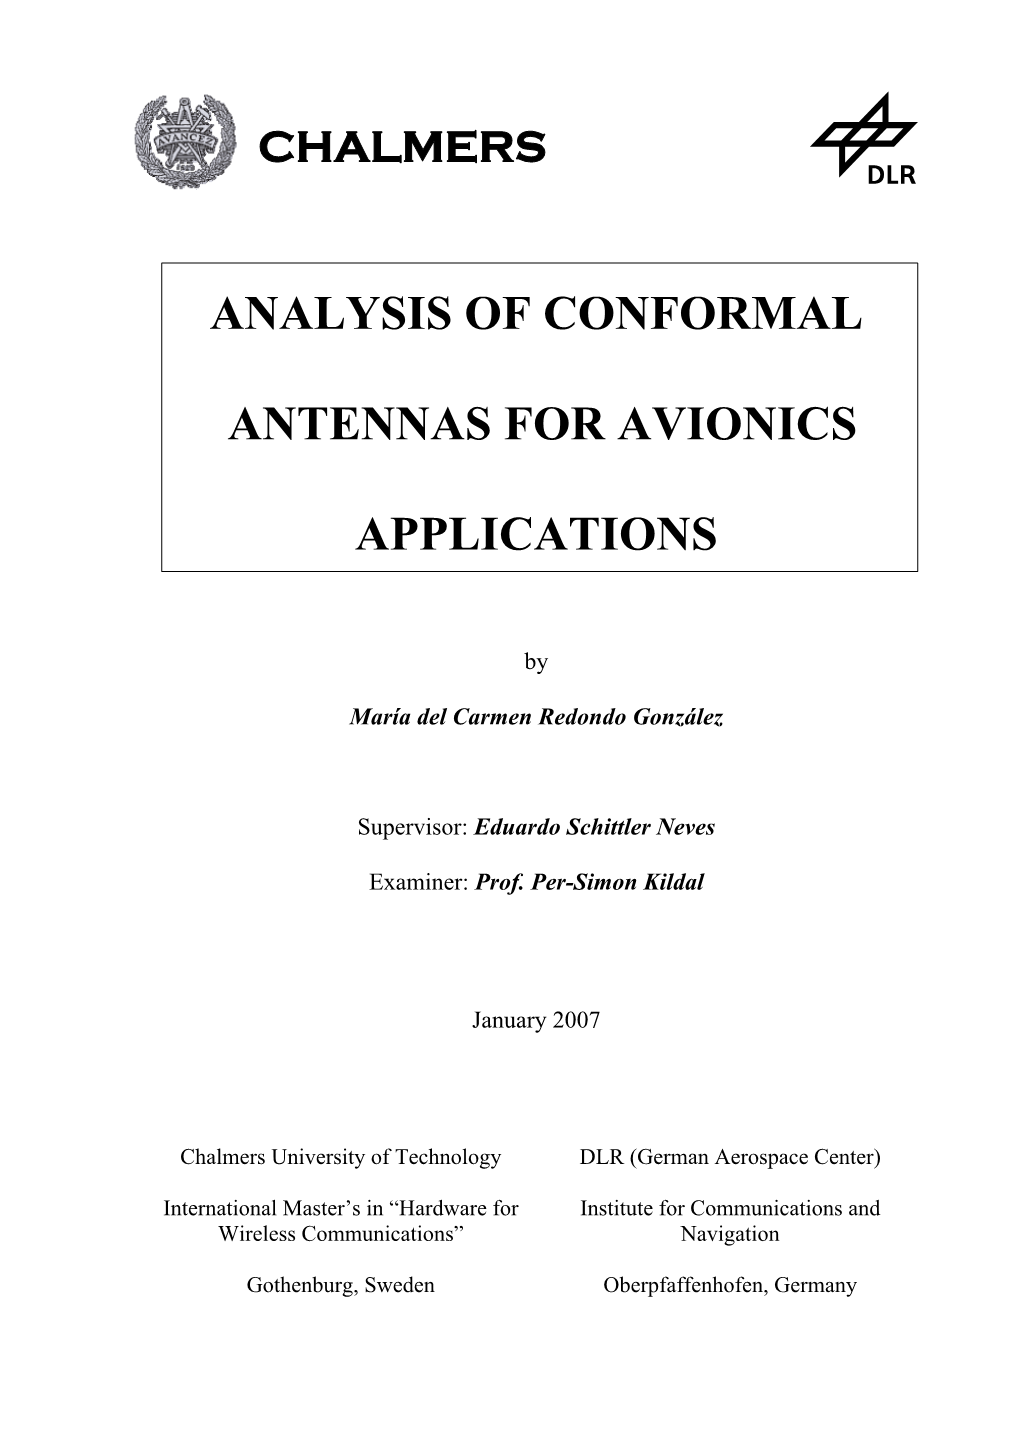 Analysis of Conformal Antennas for Avionics